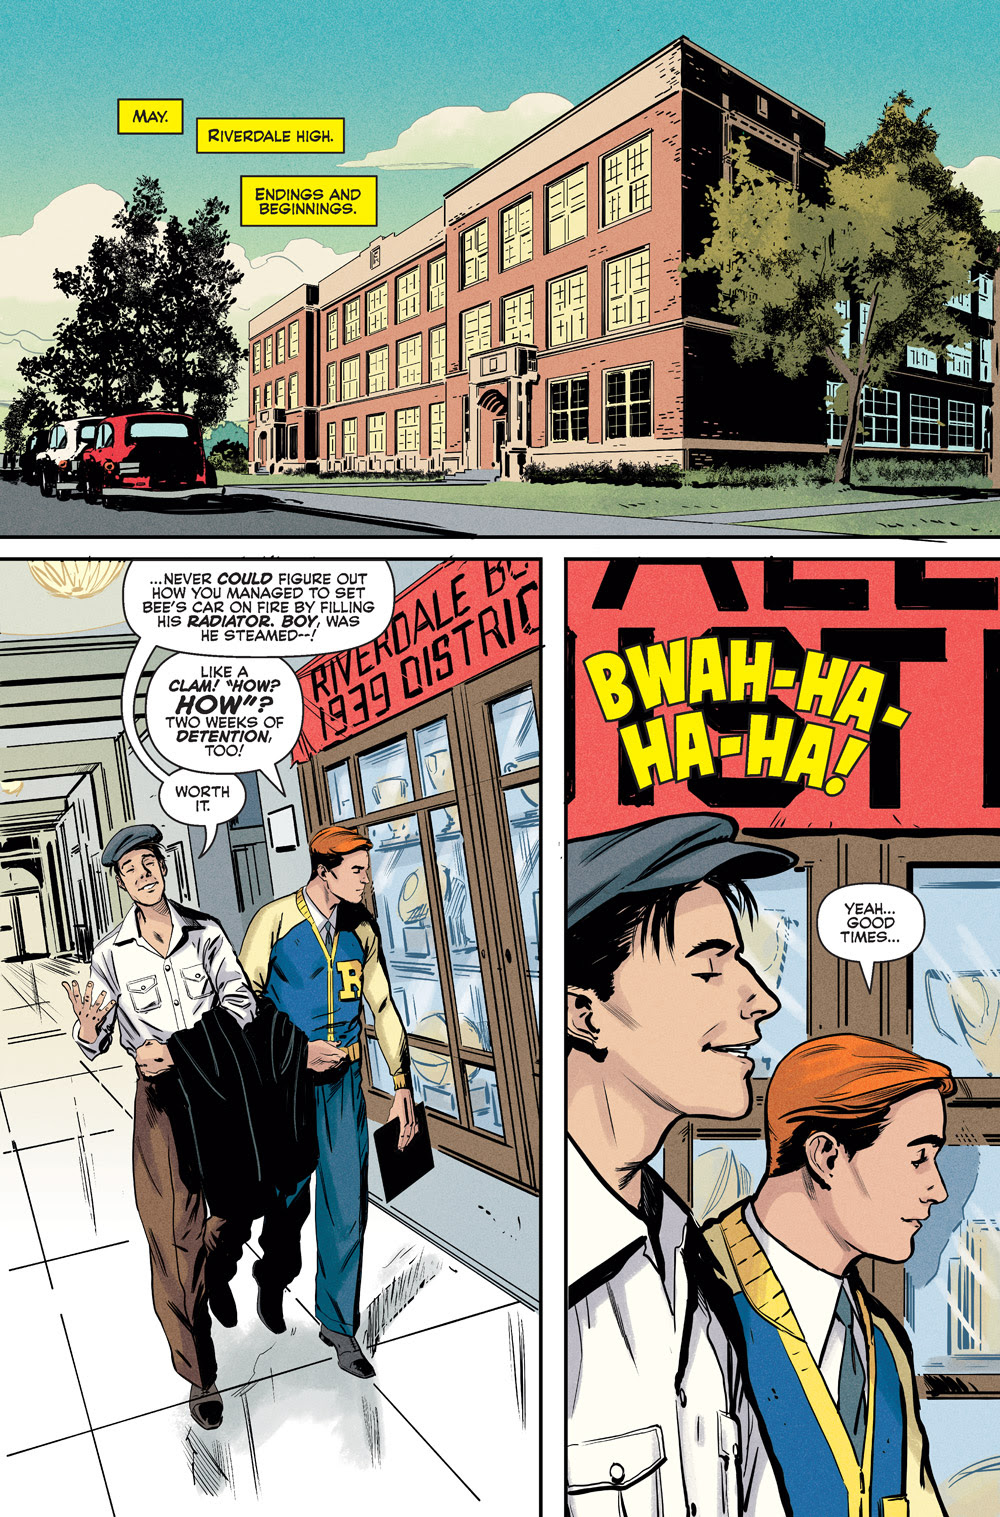 Archie 1941 #1